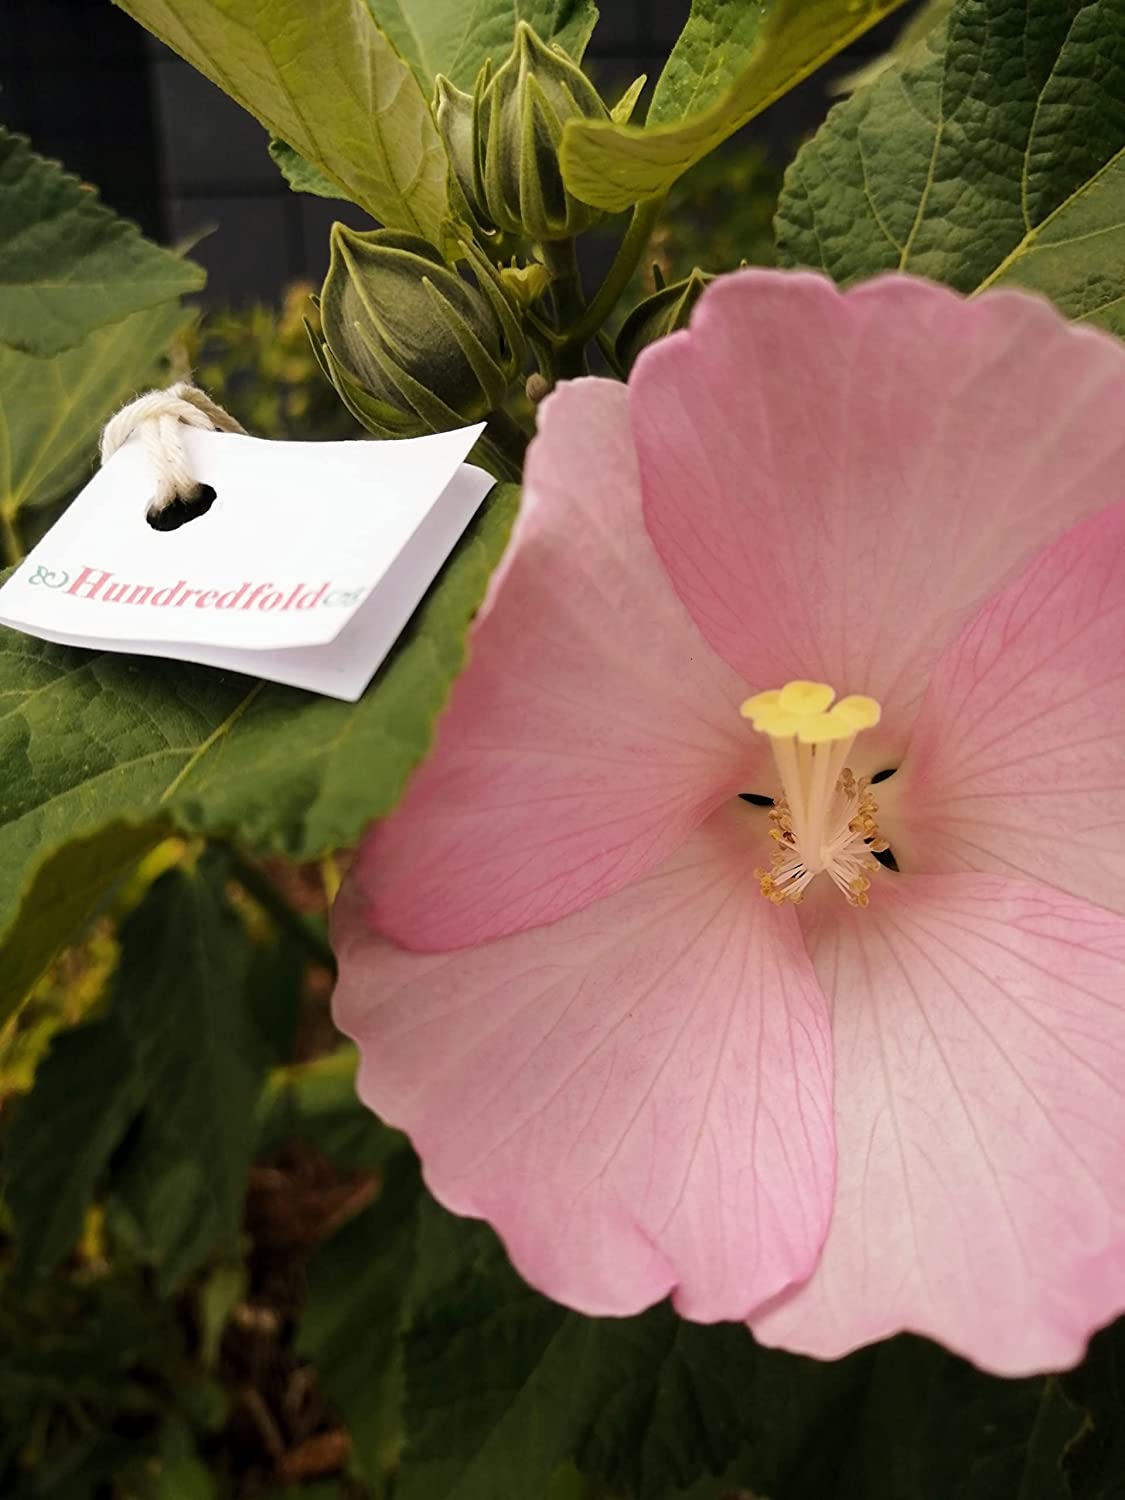 Hundredfold 10 Swamp Rose Mallow Flower Seeds - Hibiscus moscheutos Rosemallow, Marshmallow Hibiscus, Ontario Native Wild Flower Perfect for Cottage & Rain Garden